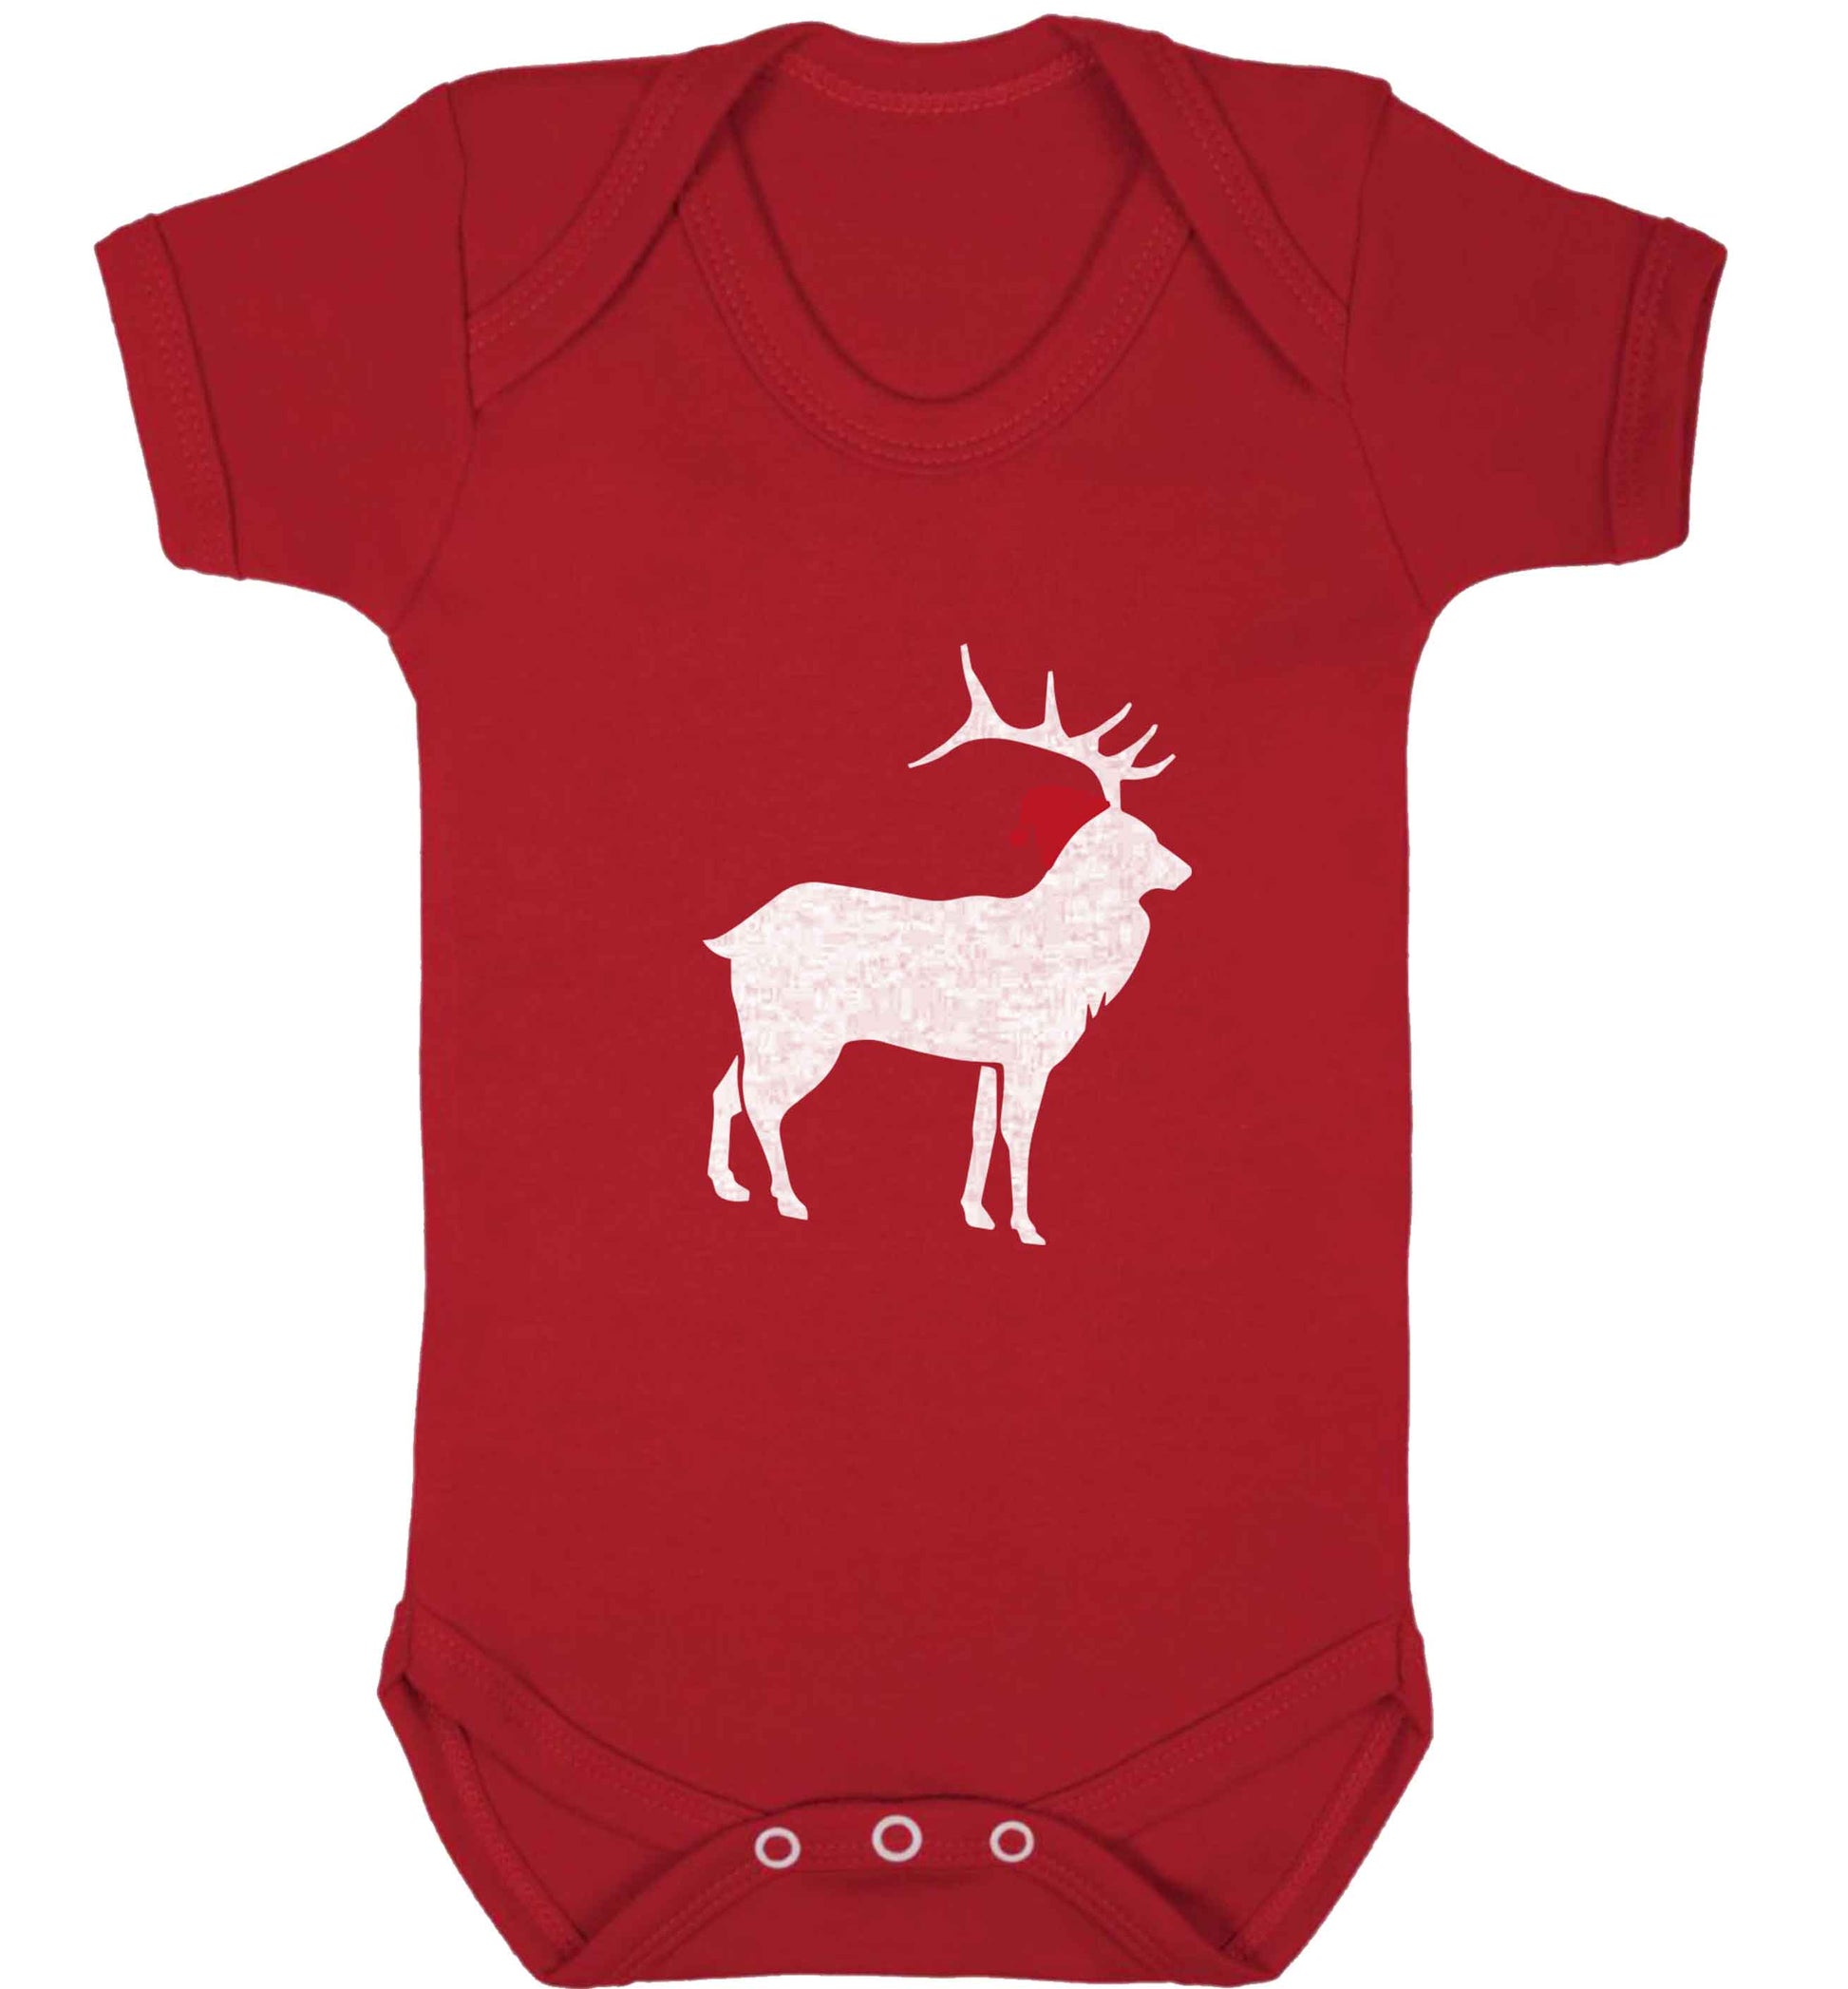 Green stag Santa baby vest red 18-24 months